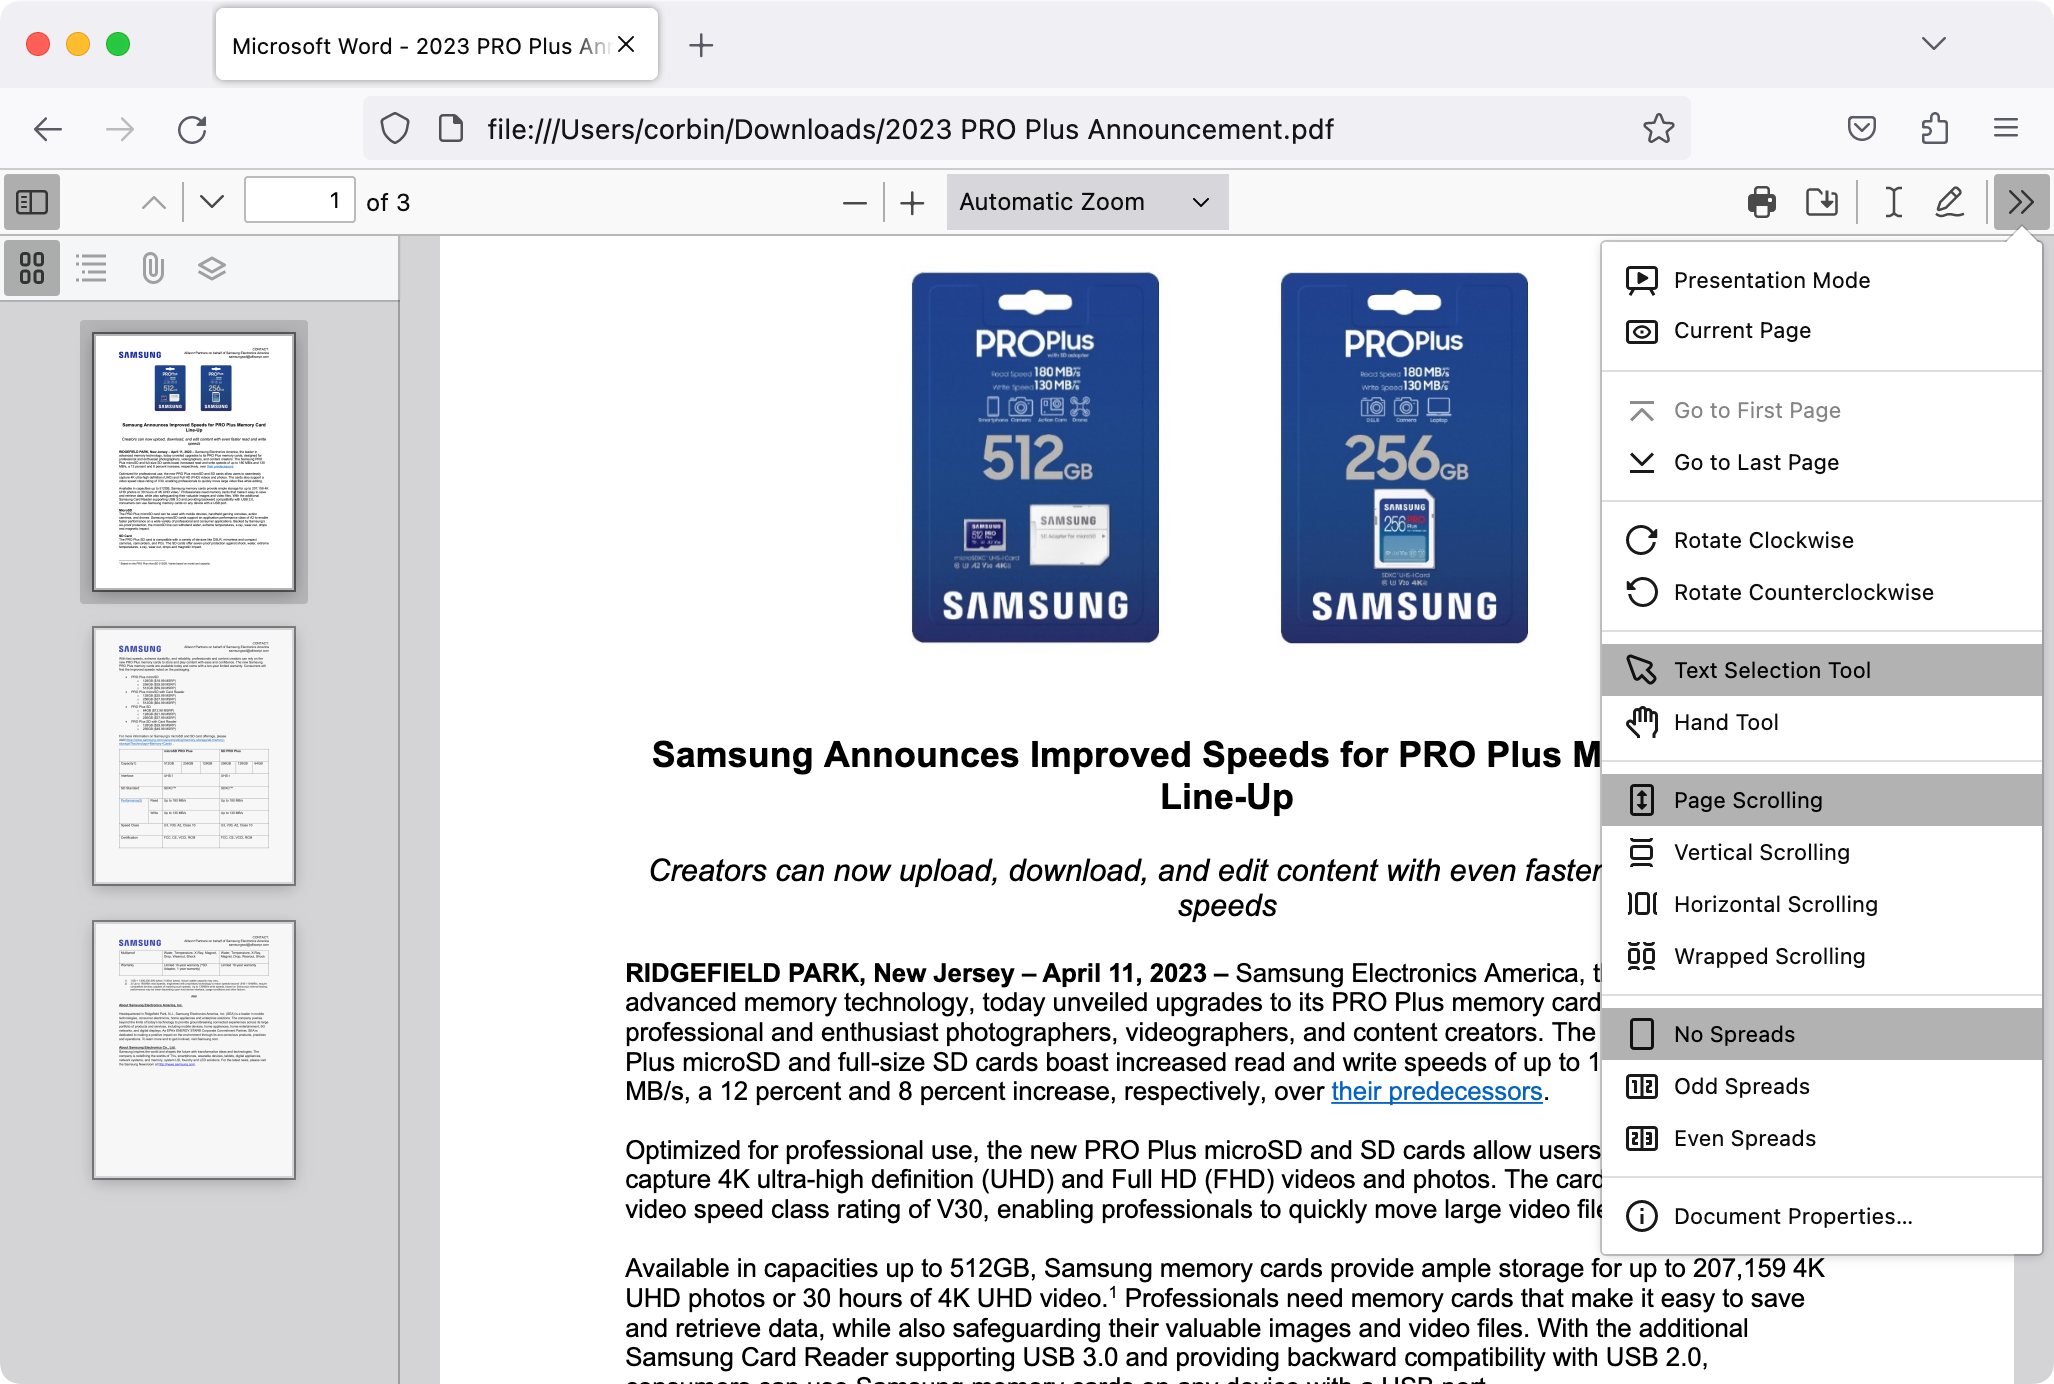 Firefox PDF viewer